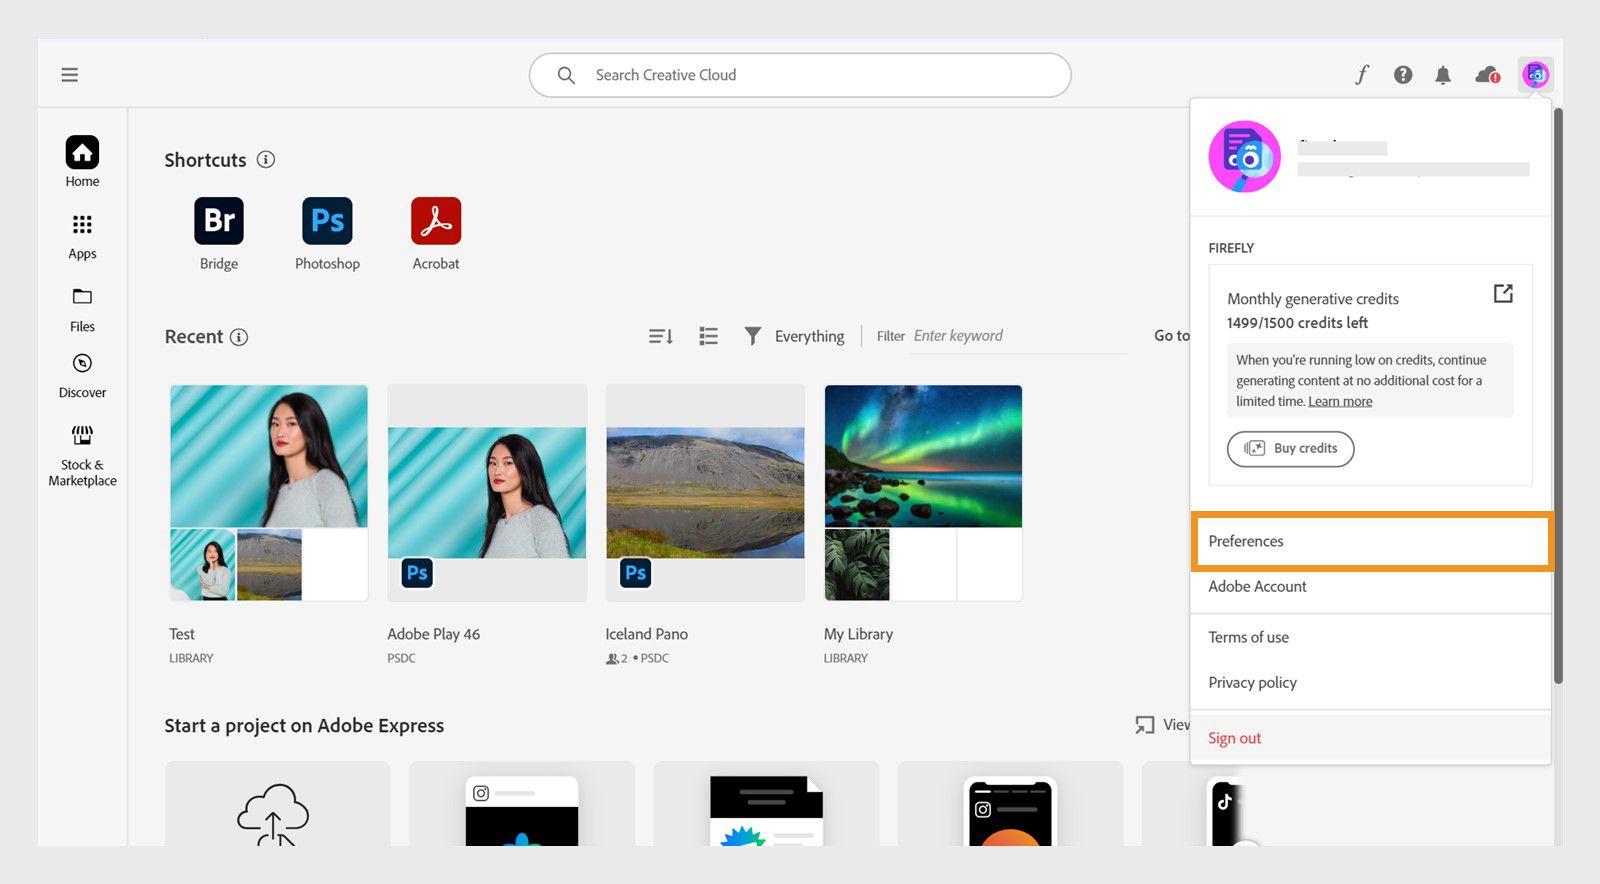 Preferences menu visible under Accounts on the Creative Cloud desktop app